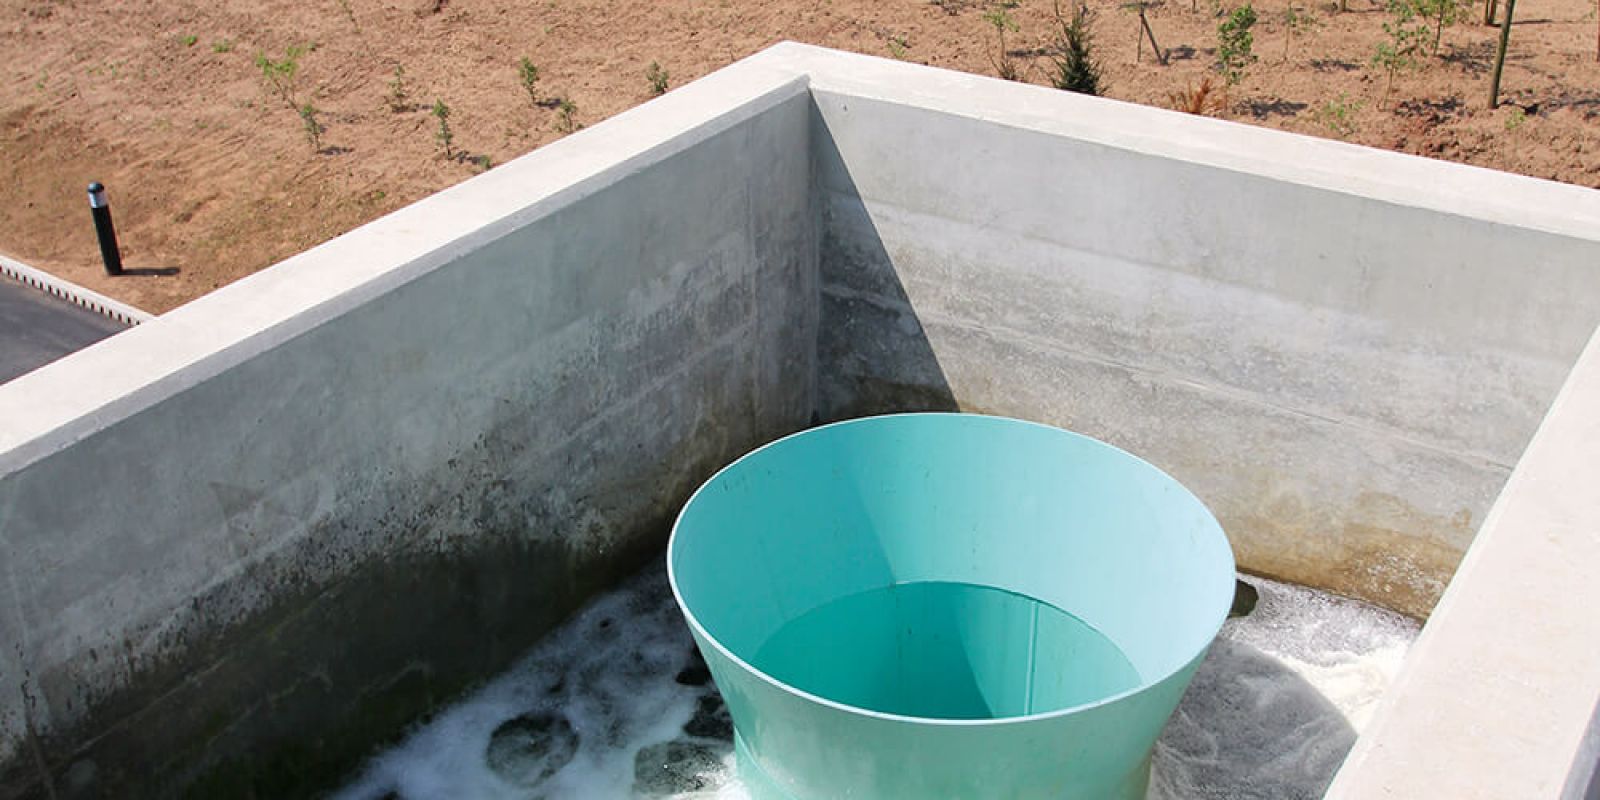 Water innovation